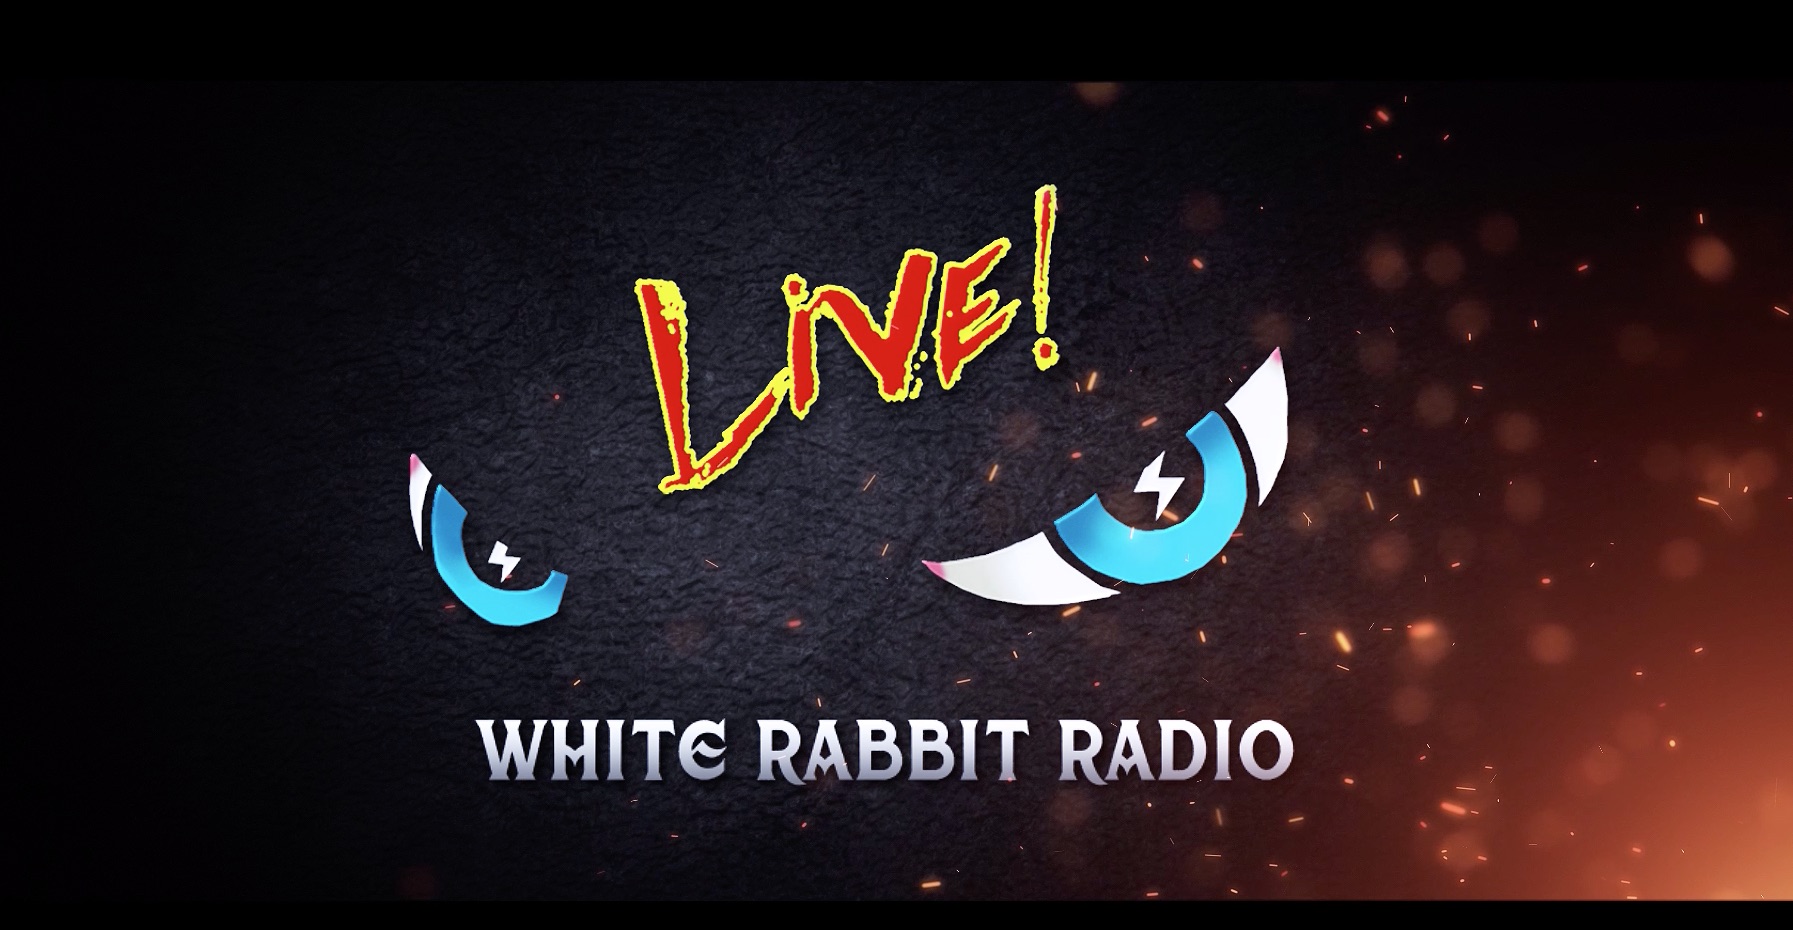 WhiteRabbitRadio logo